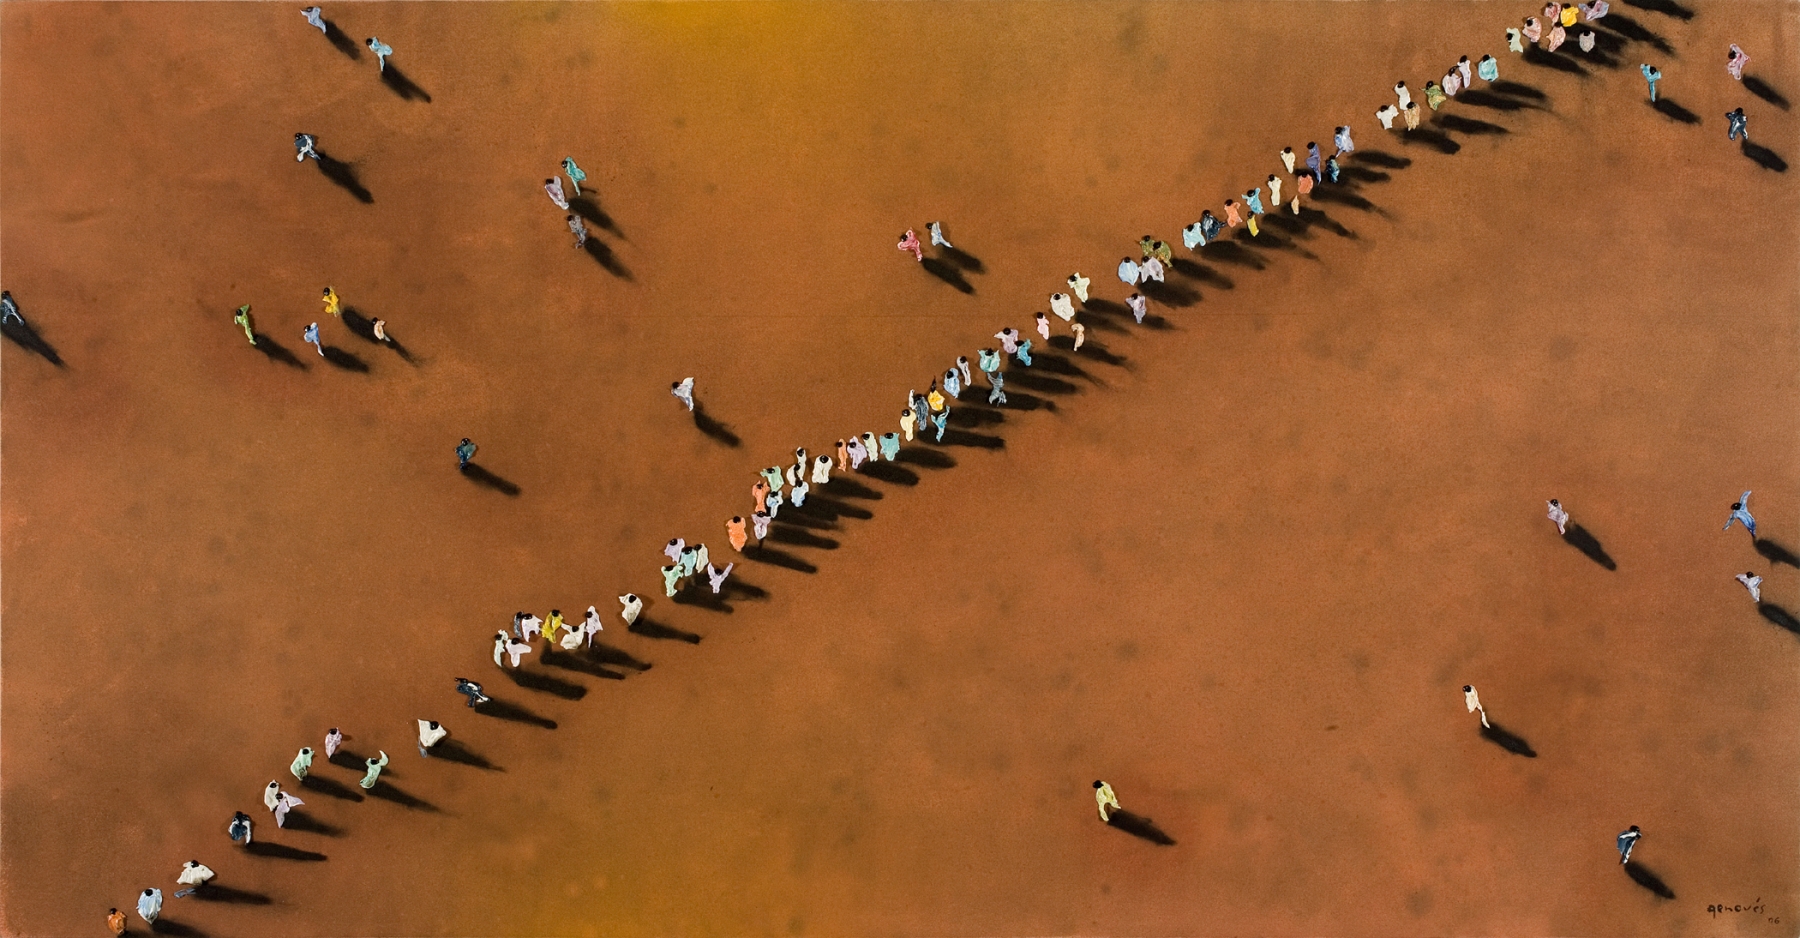 Aerial view depicting line of people on a burnt orange background by Juan Genovés.